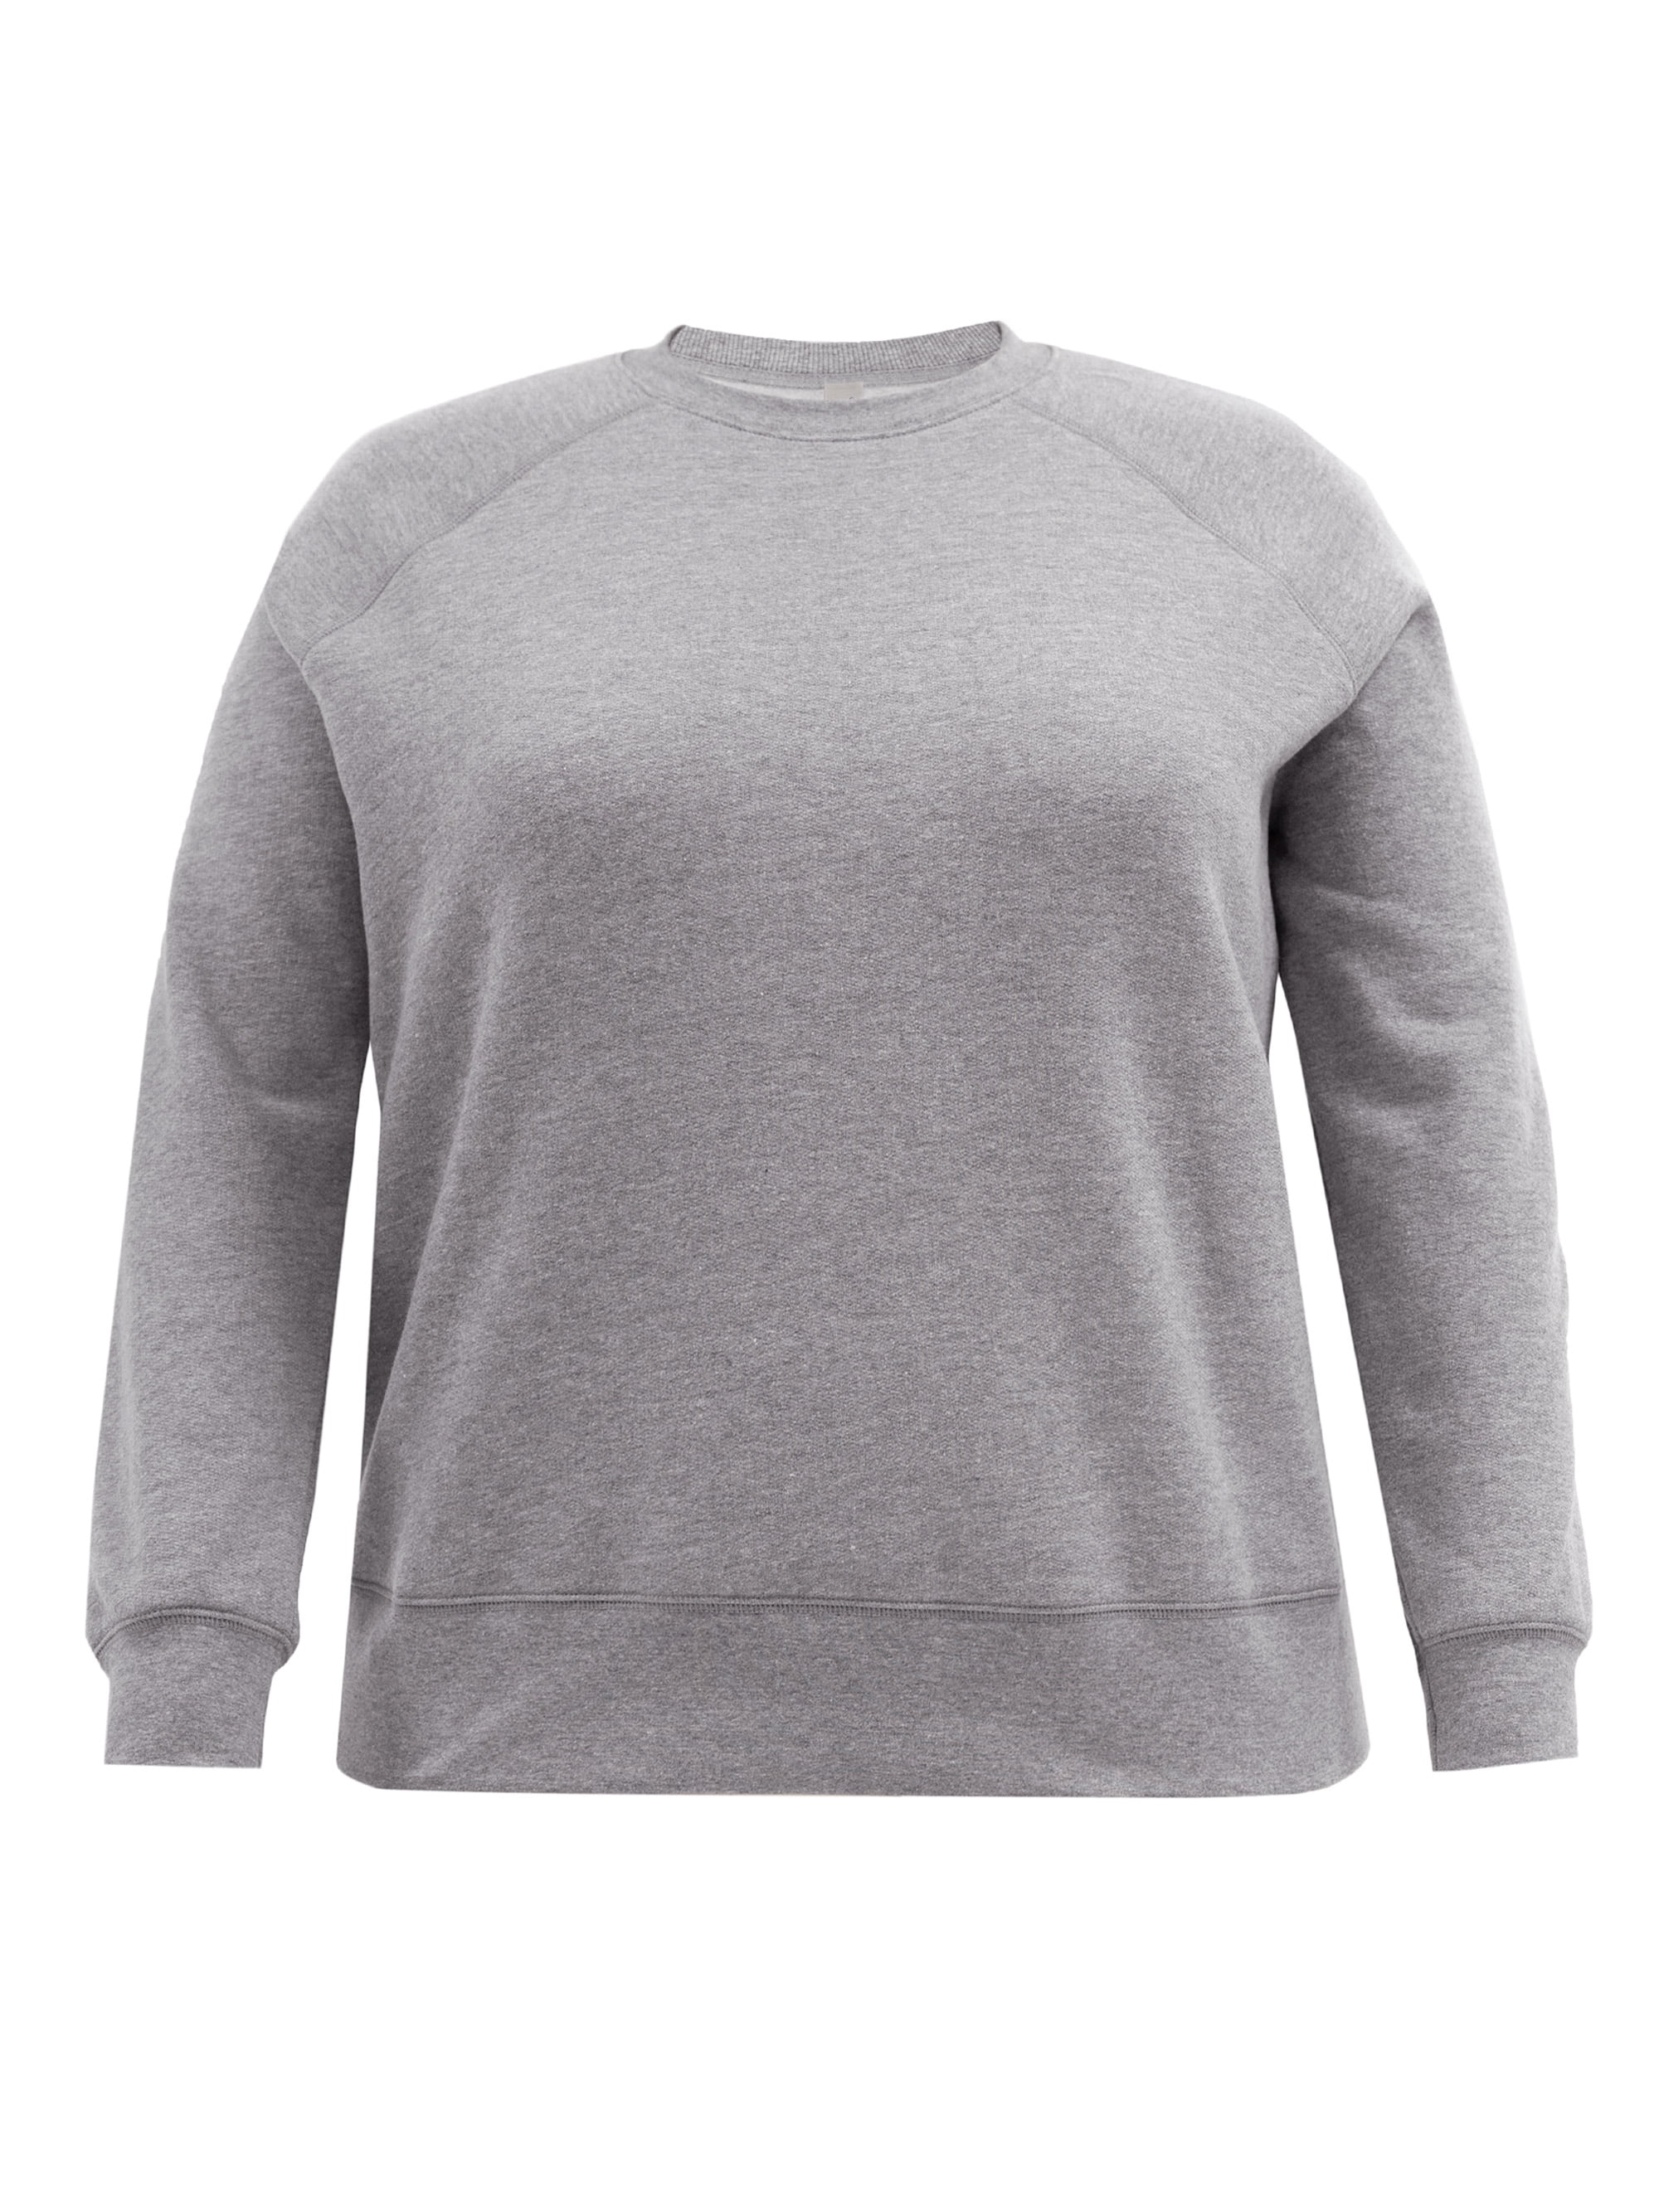 NEW Plus Size TEK GEAR Gray Space Dye Fleece Top 2X NWT 